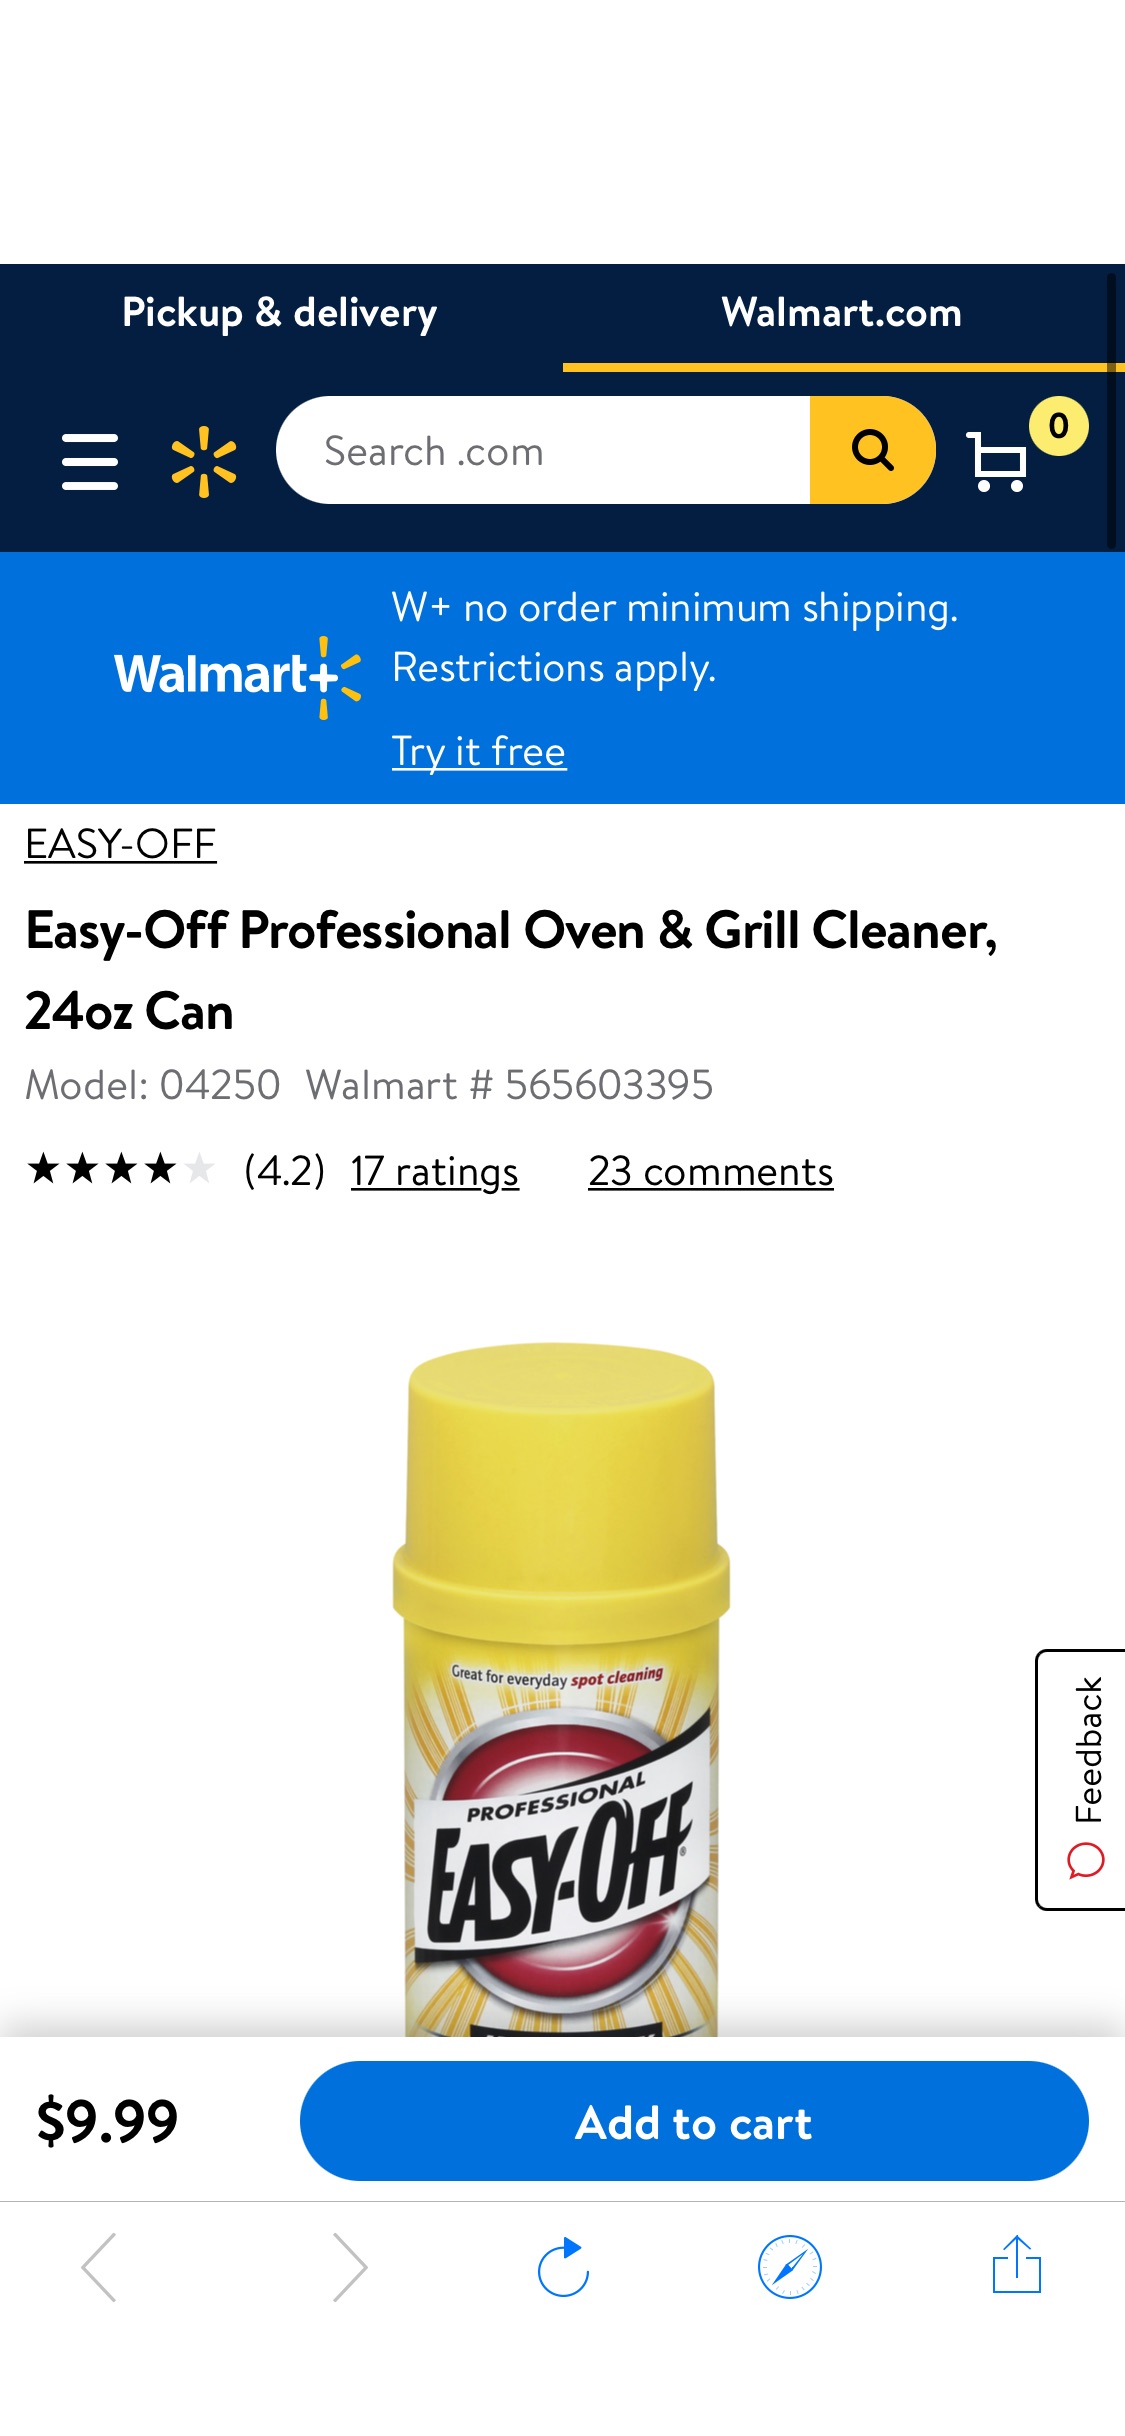 Easy-Off Professional Oven & Grill Cleaner, 24oz Can - Walmart.com - Walmart.com 清理